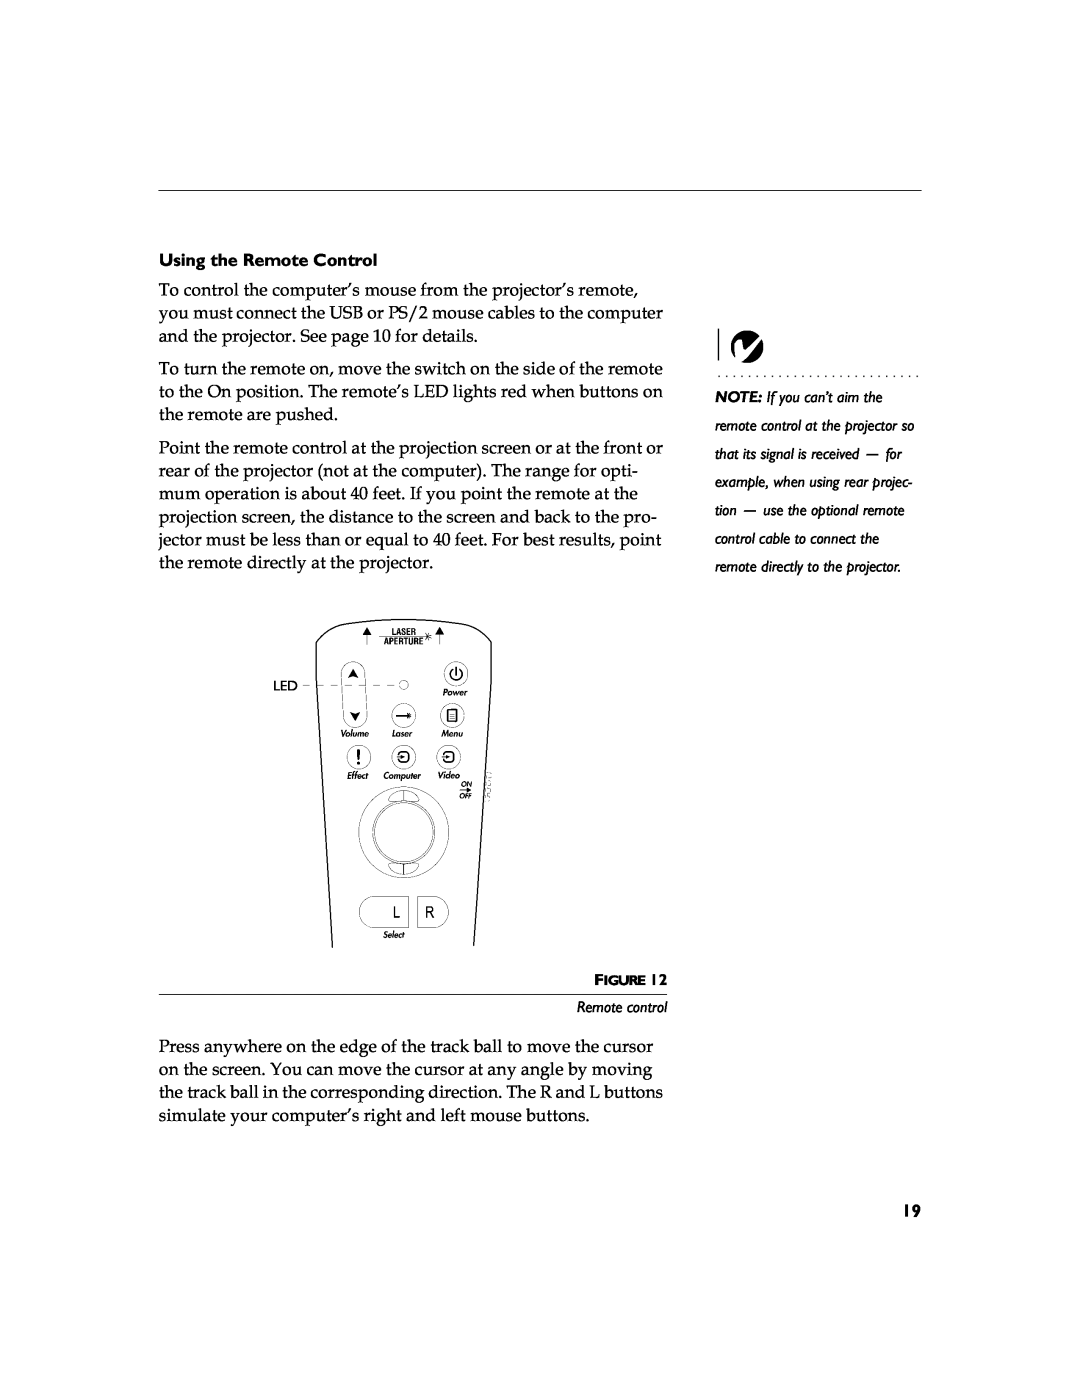 InFocus LP 790 manual Using the Remote Control, Wkhuhprwhduhsxvkhg, Wkhuhprwhgluhfwo\Dwwkhsurmhfwru, Remote control 